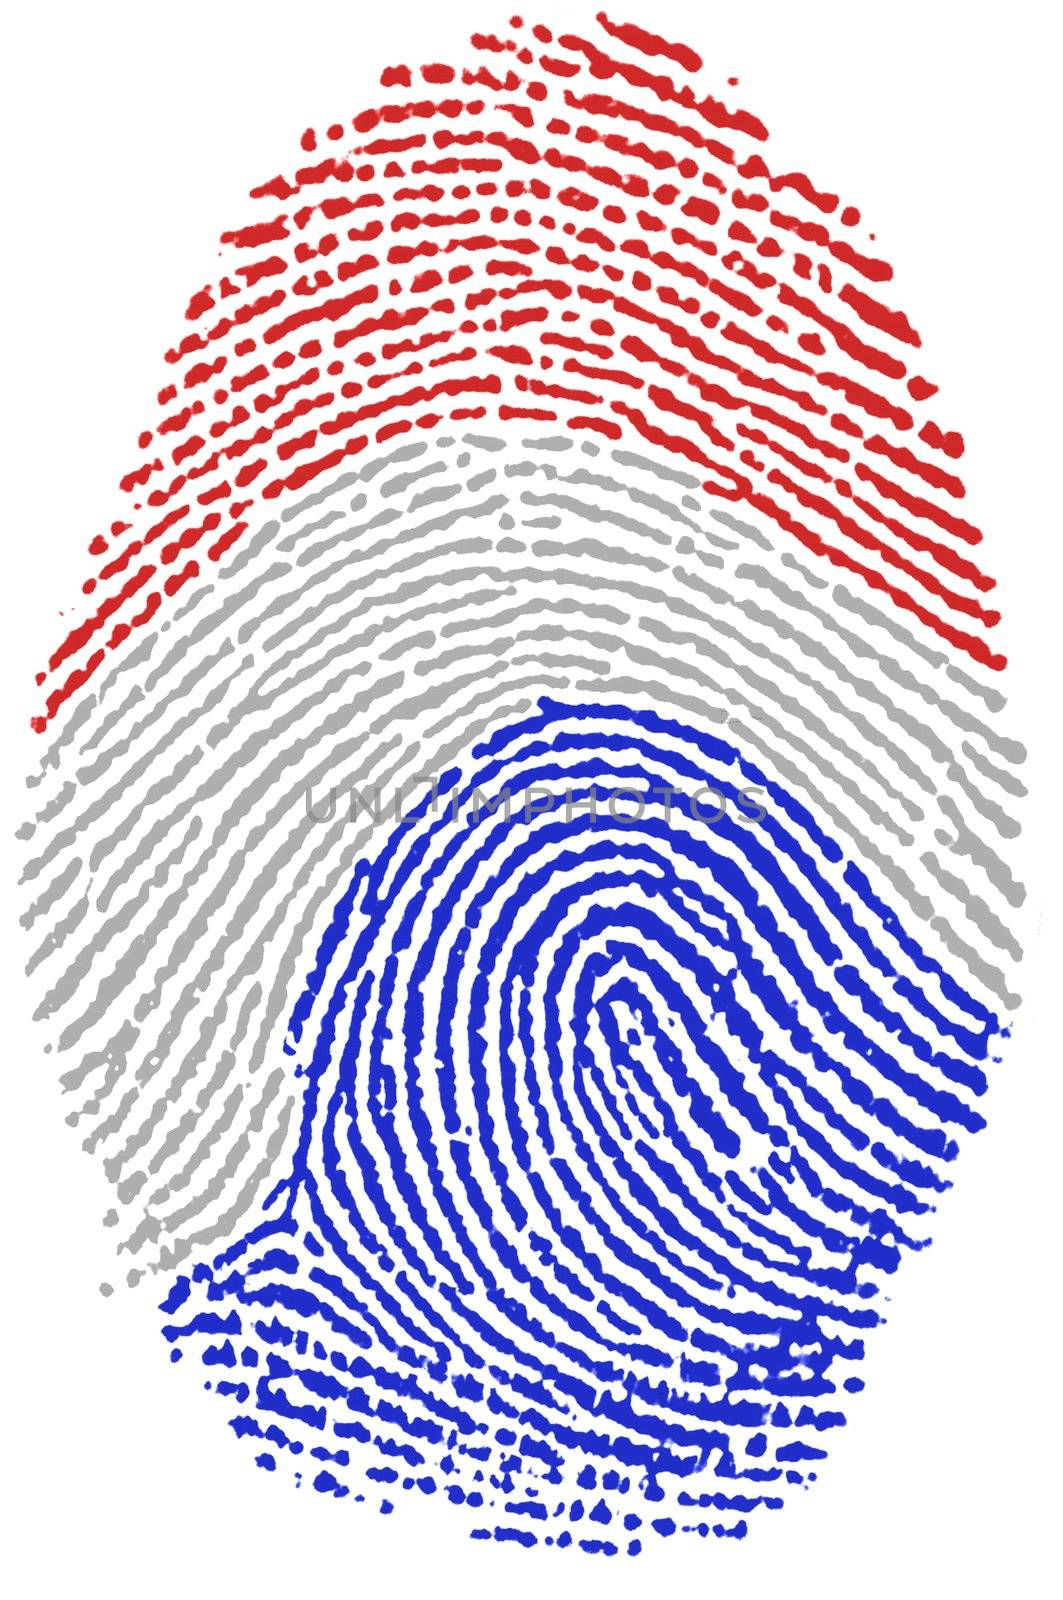 Fingerprint - Dutch by rigamondis